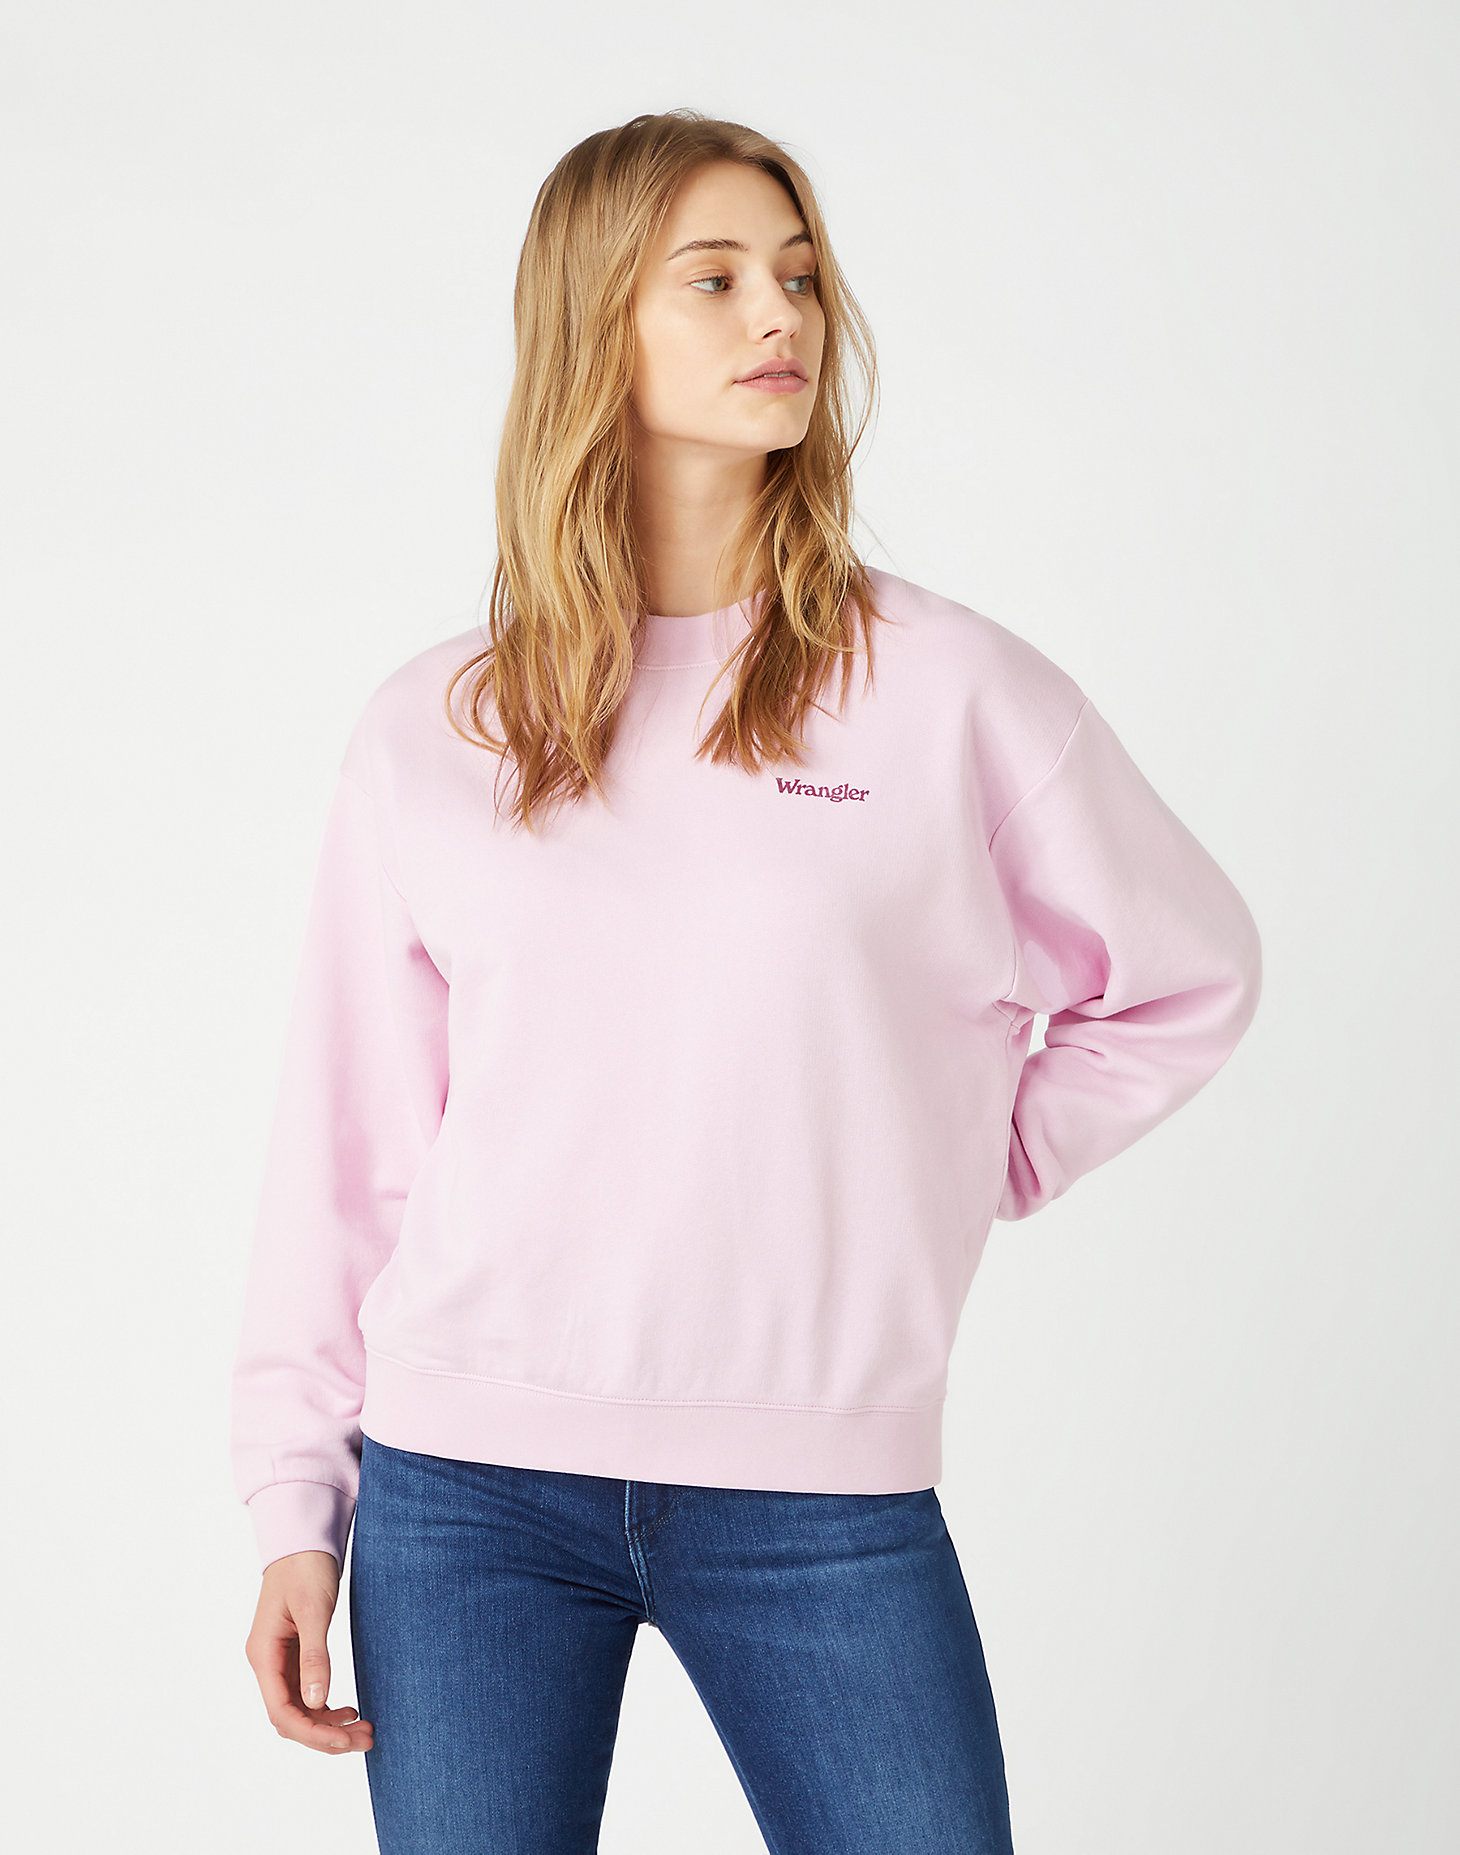 Retro Logo Sweater in Pink Lavender alternative view 1